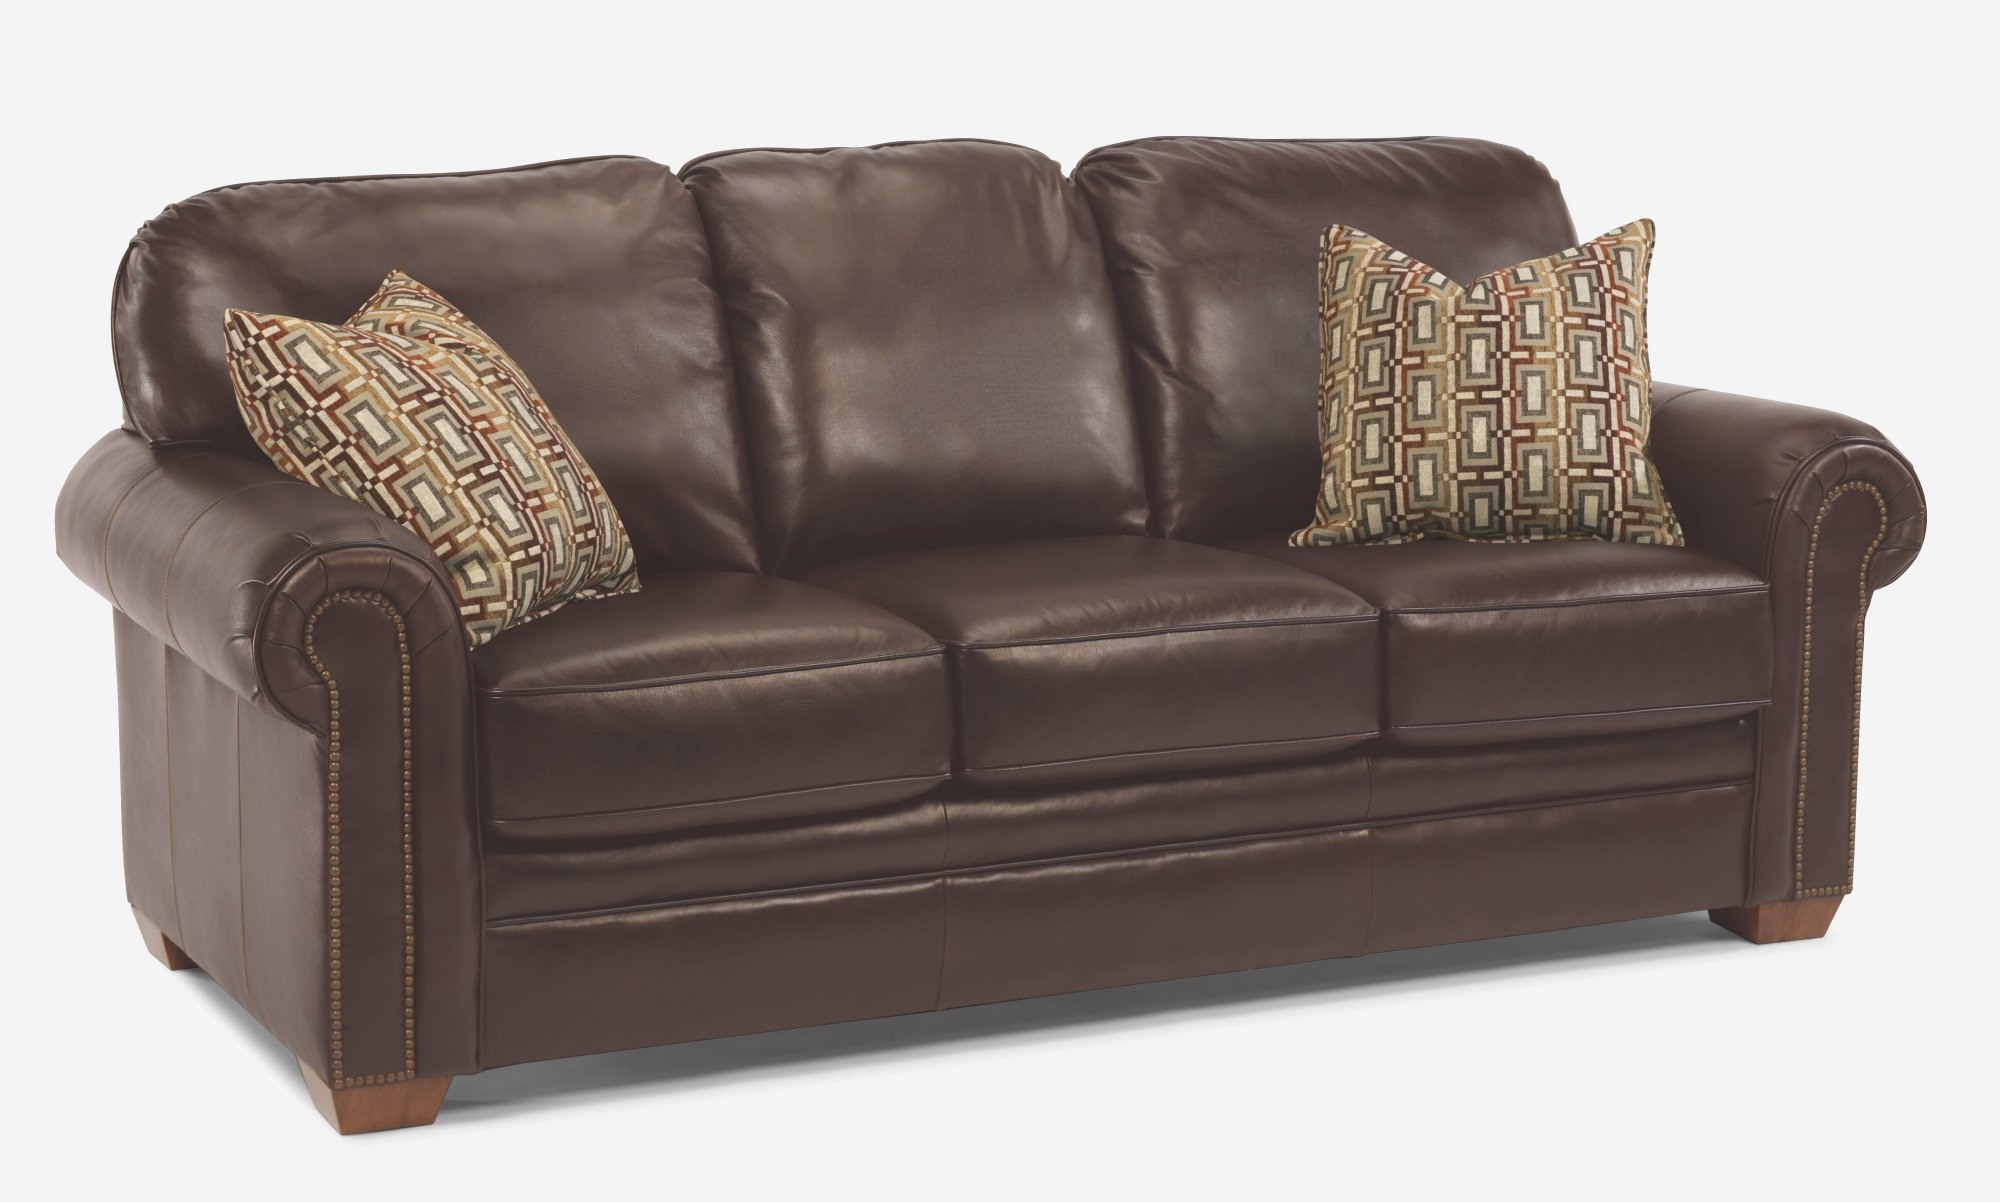 leather sofa surface peeling